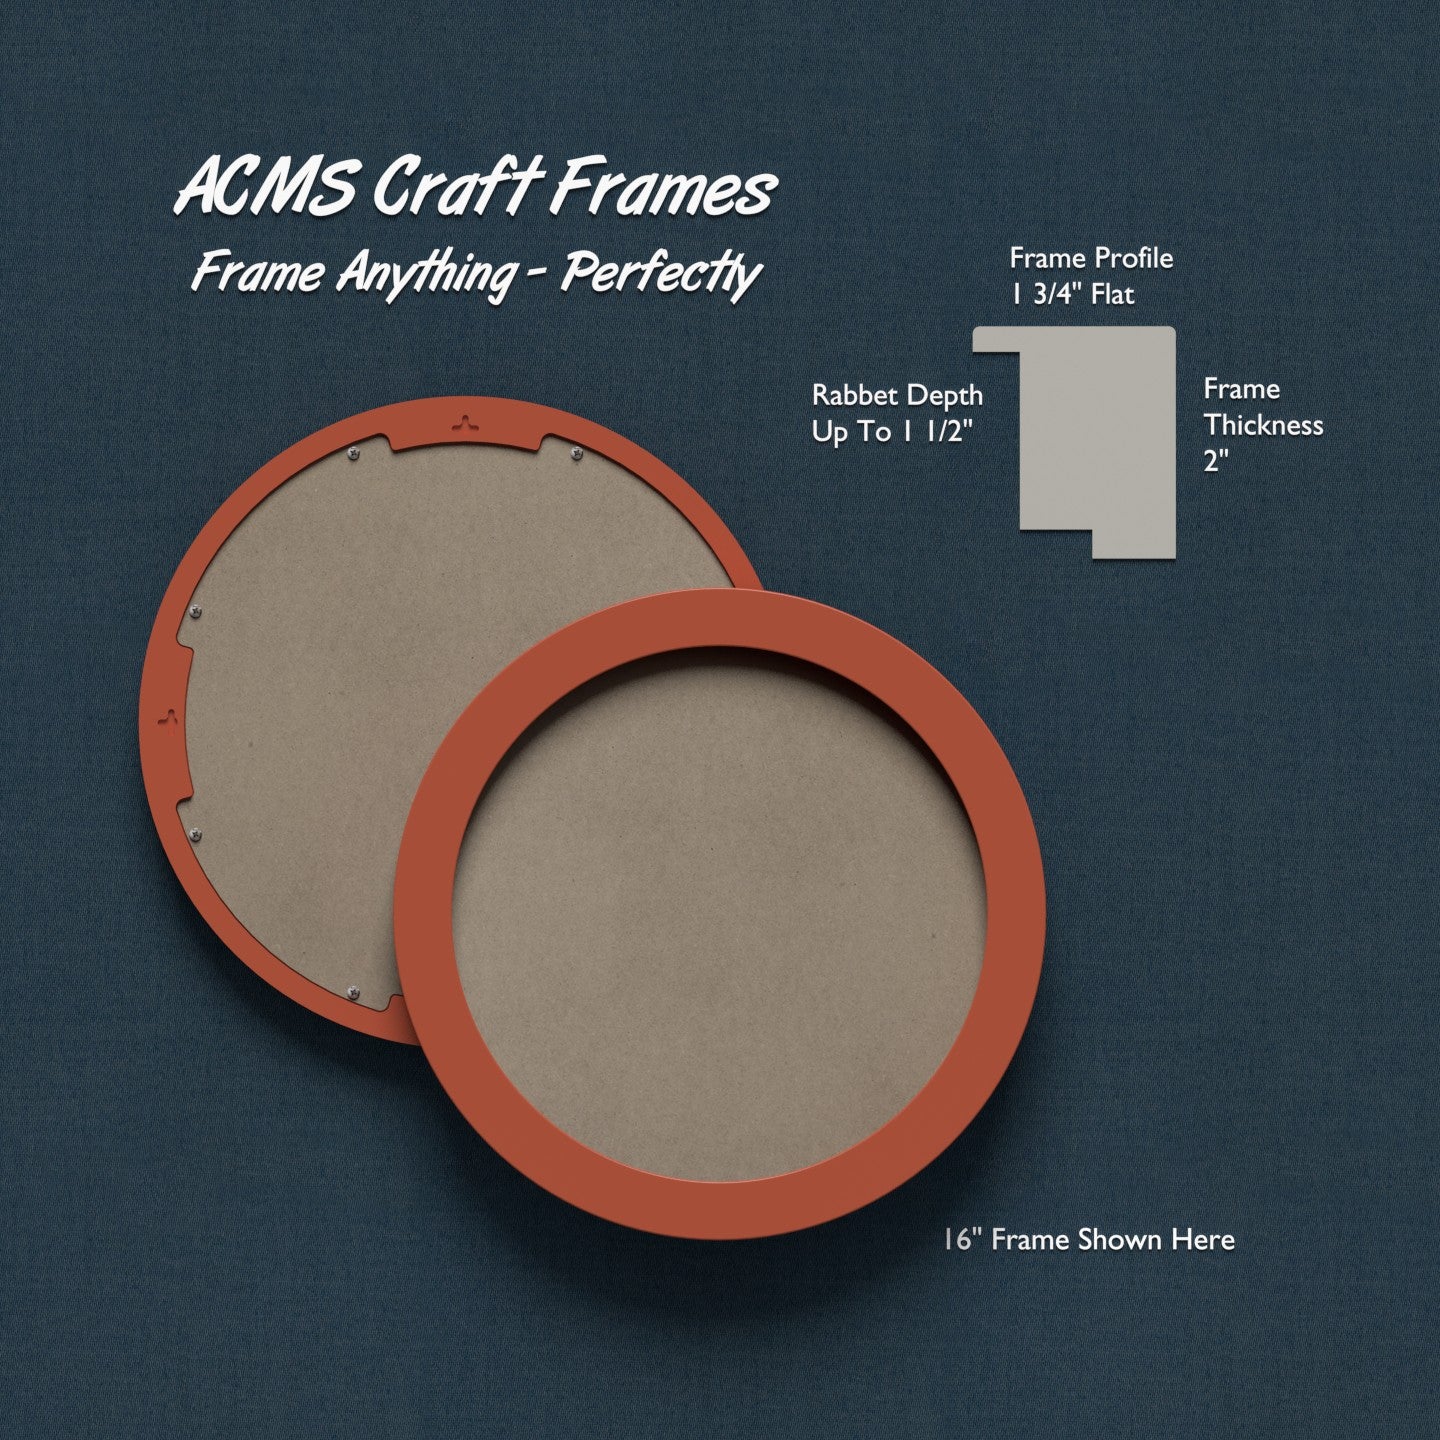 Round Craft Frame - 2" Thick - 1 3/4" Flat Profile